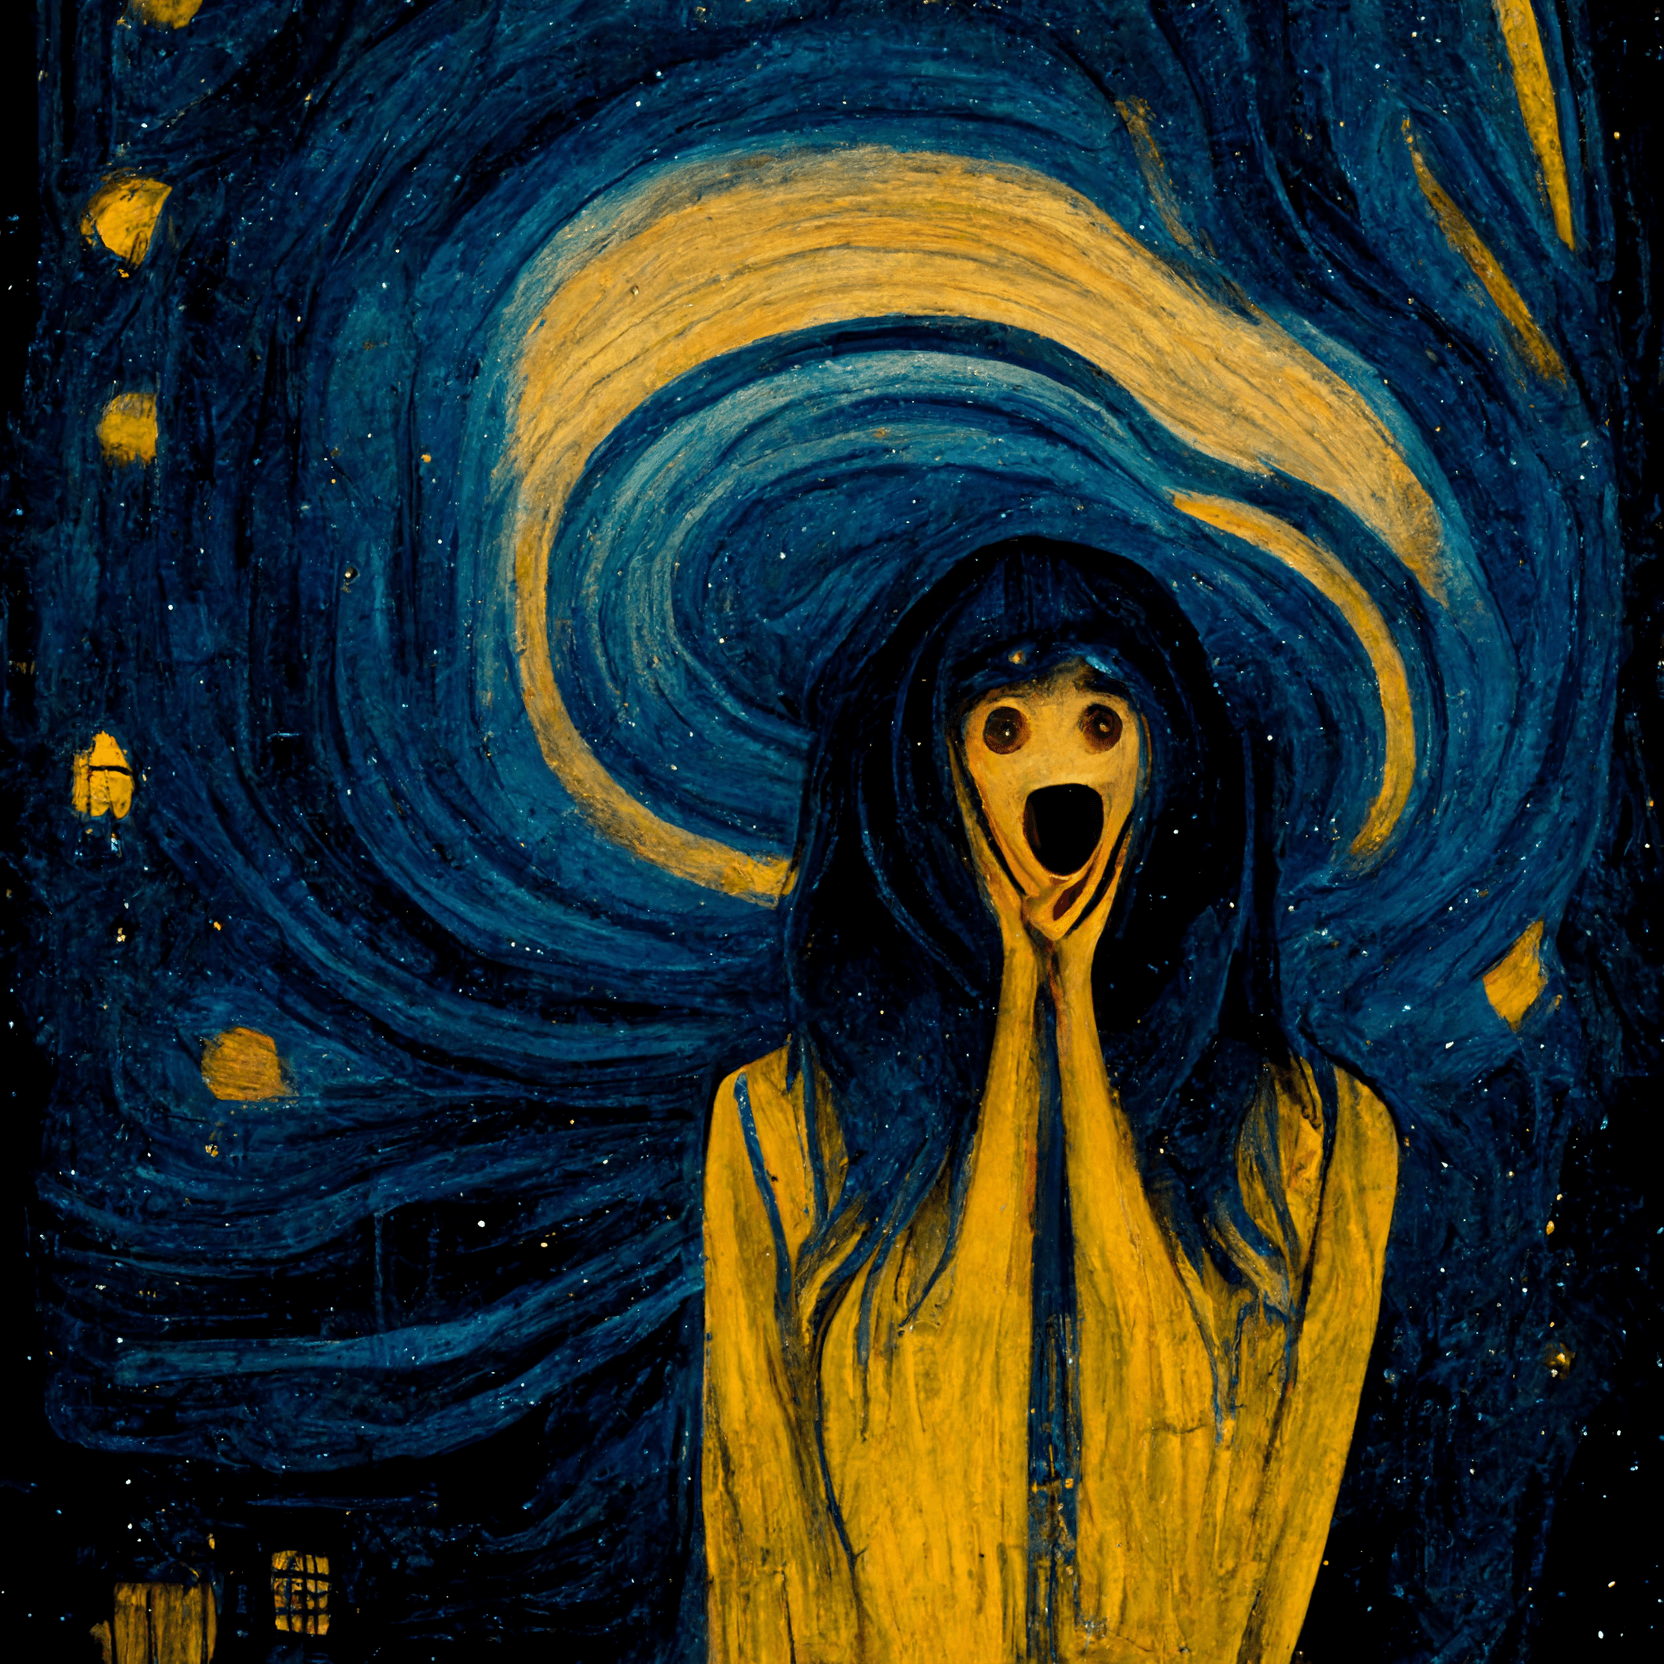 The scream in starry night